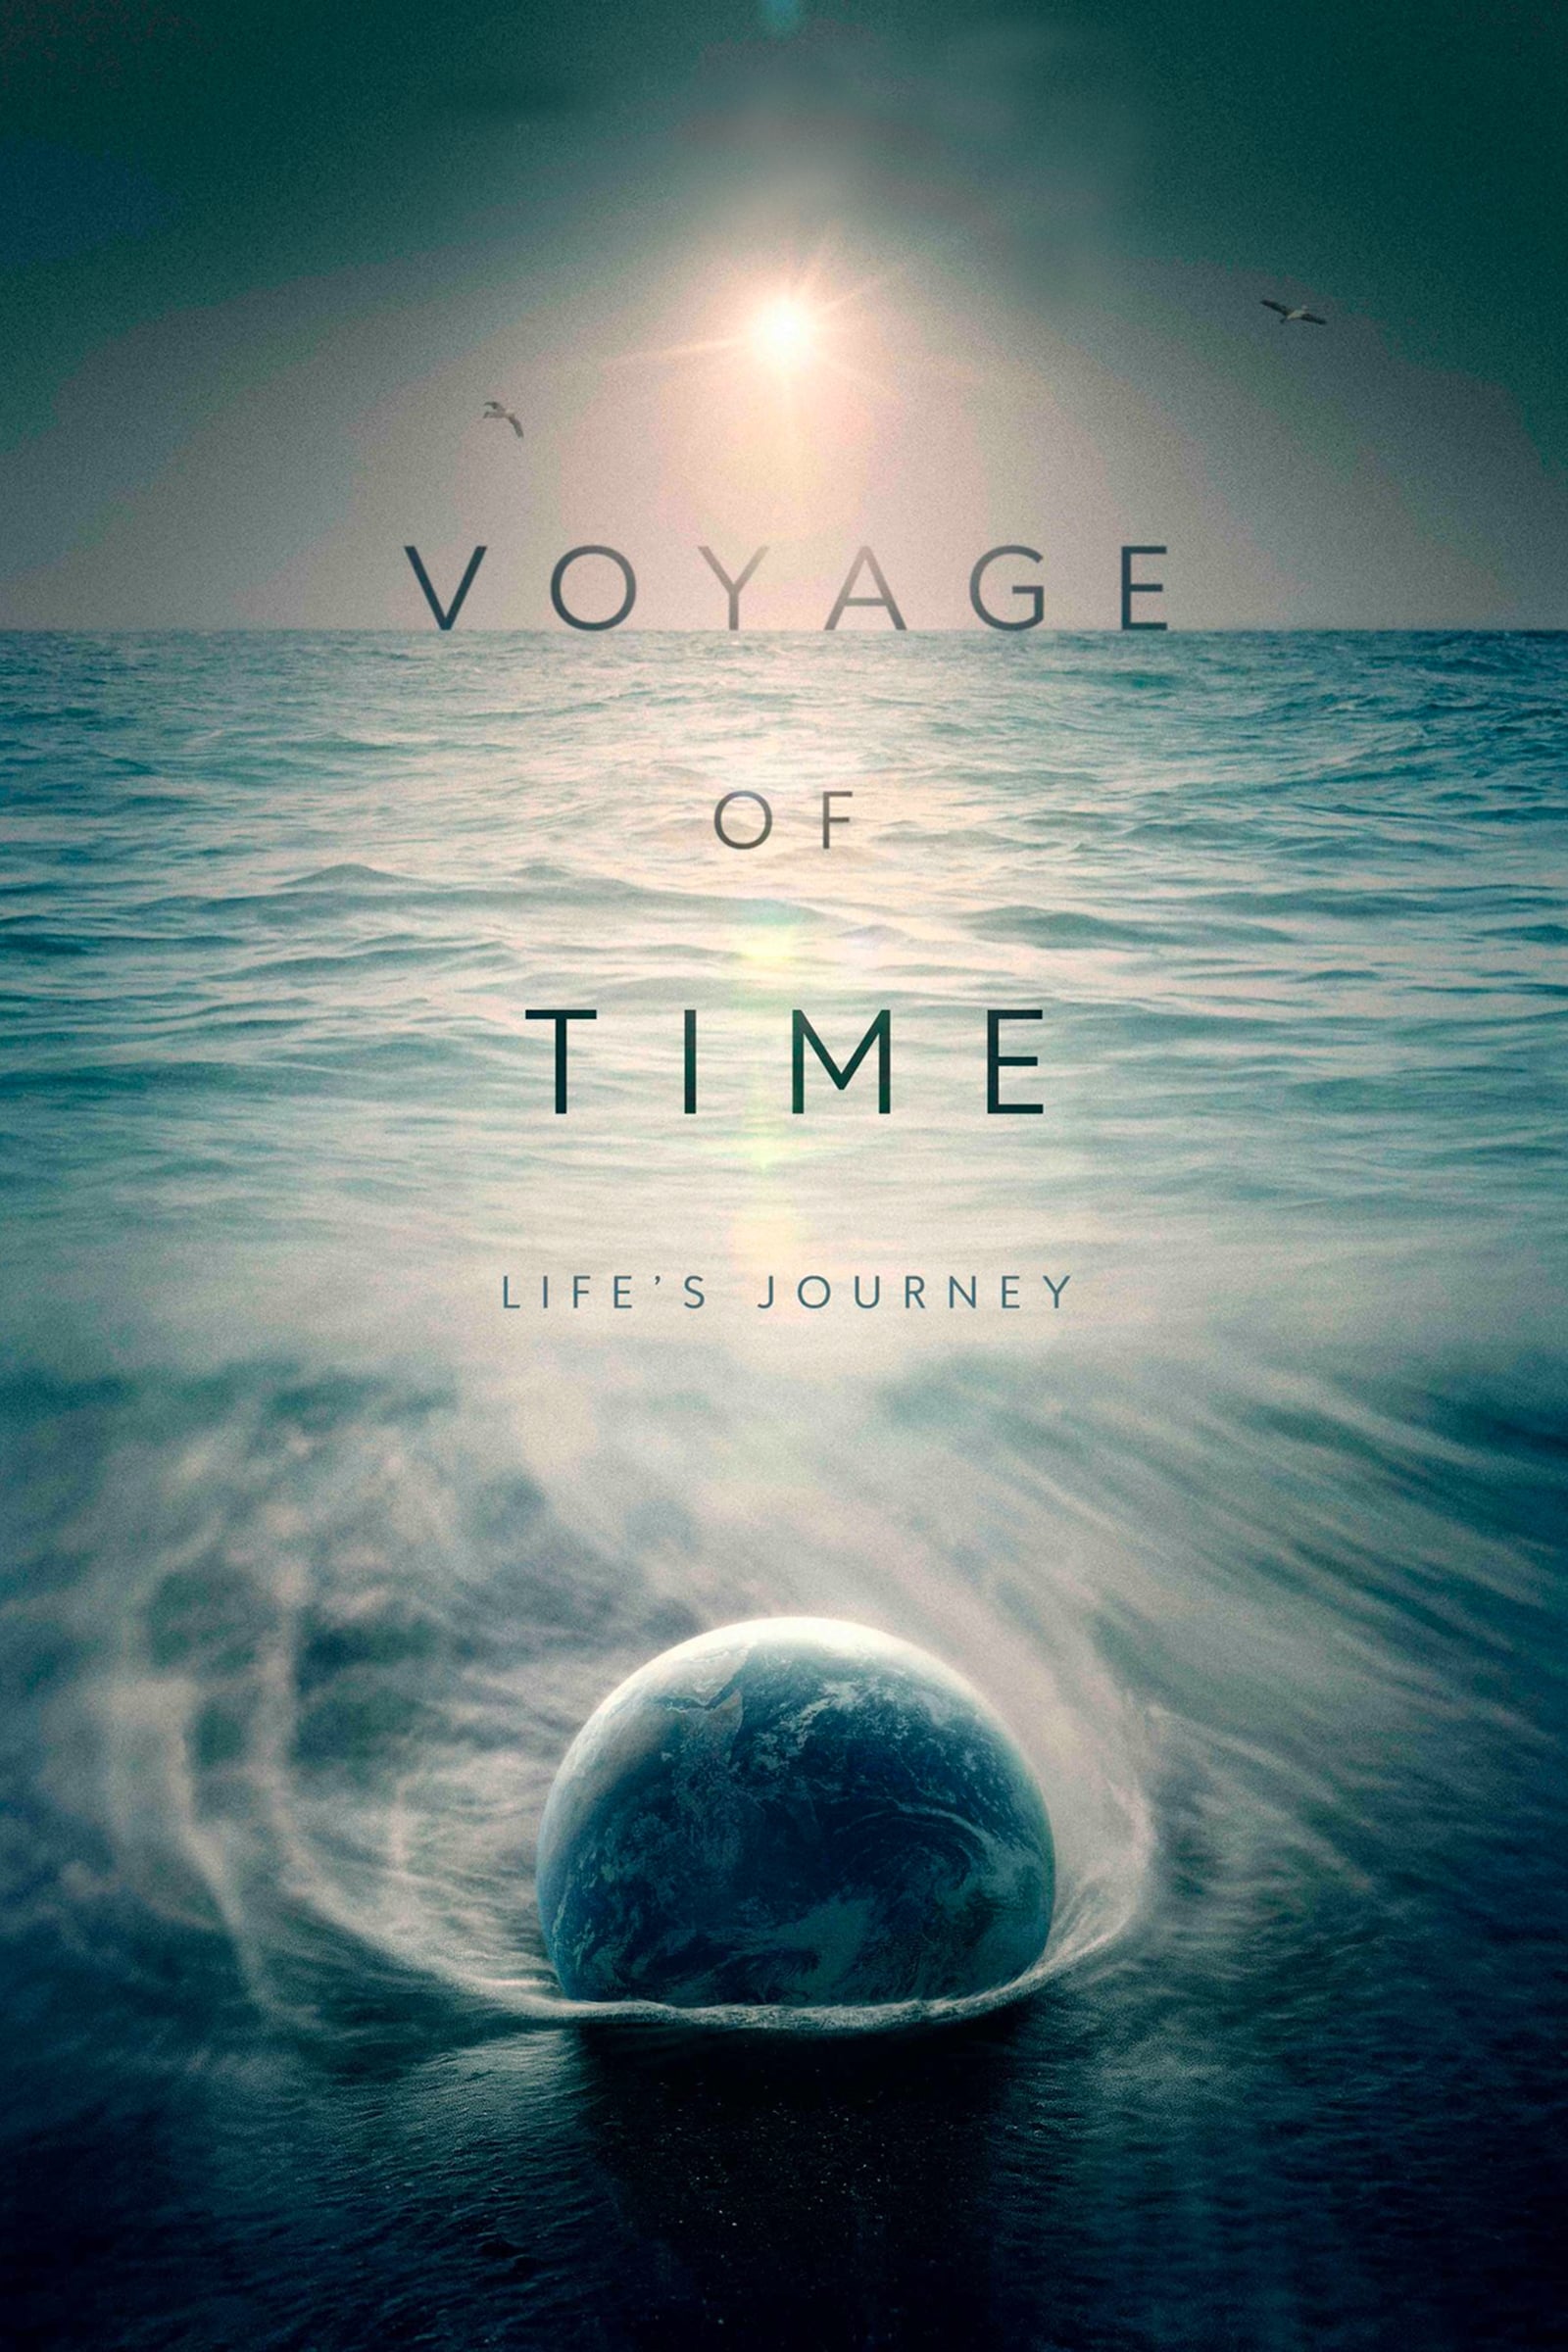 Voyage of Time : Au fil de la vie